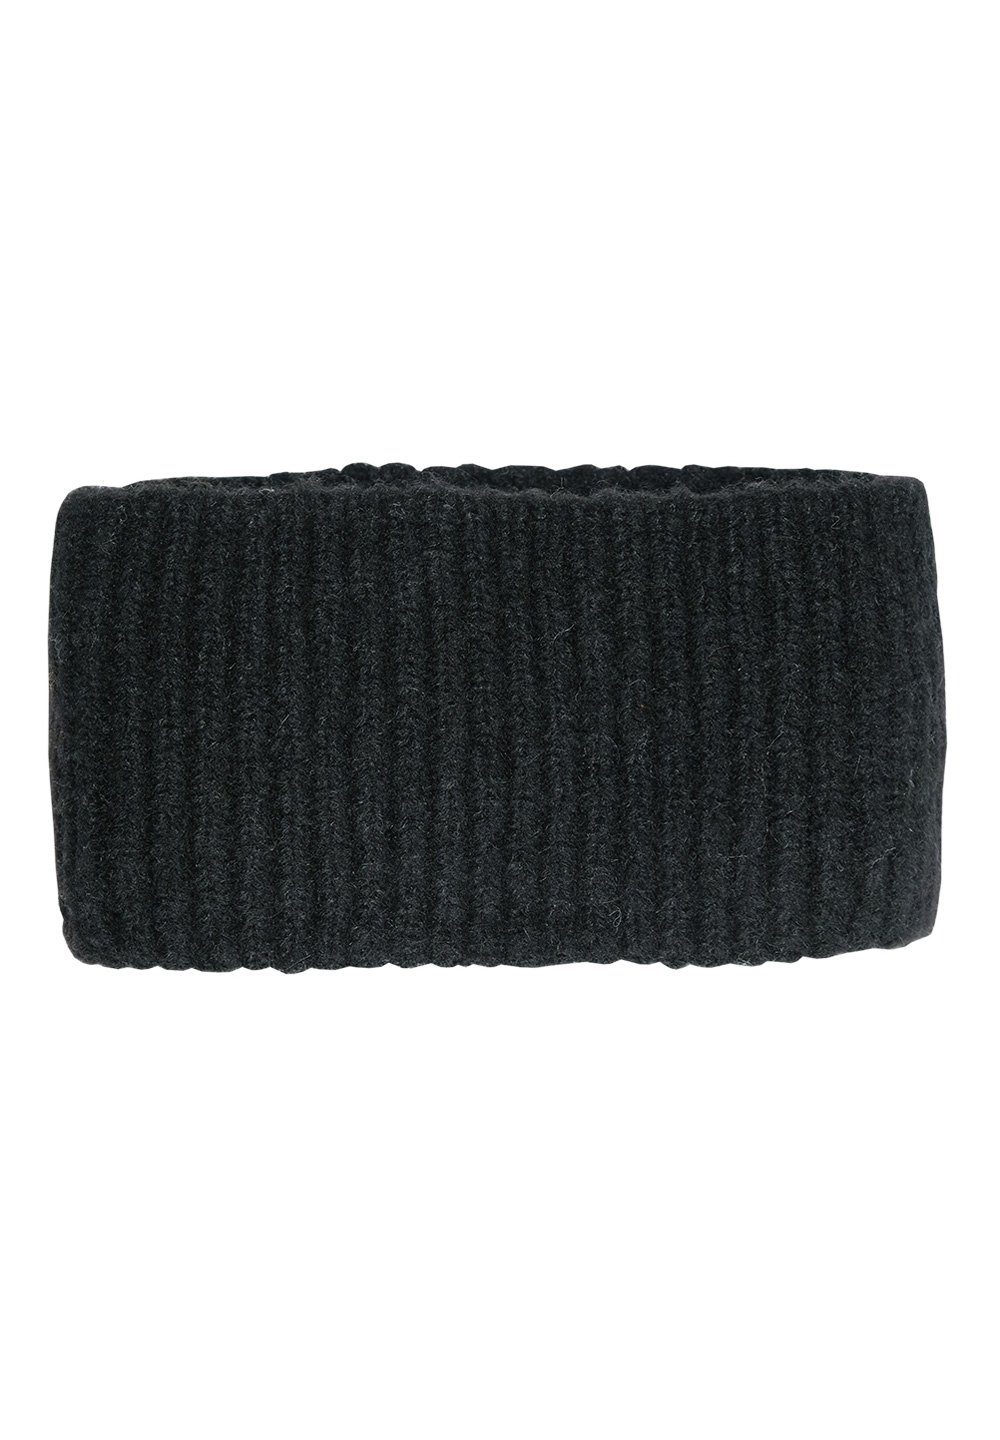 CAPO Stirnband in Europe Fleecfutter Made Strickstirnband, black soft